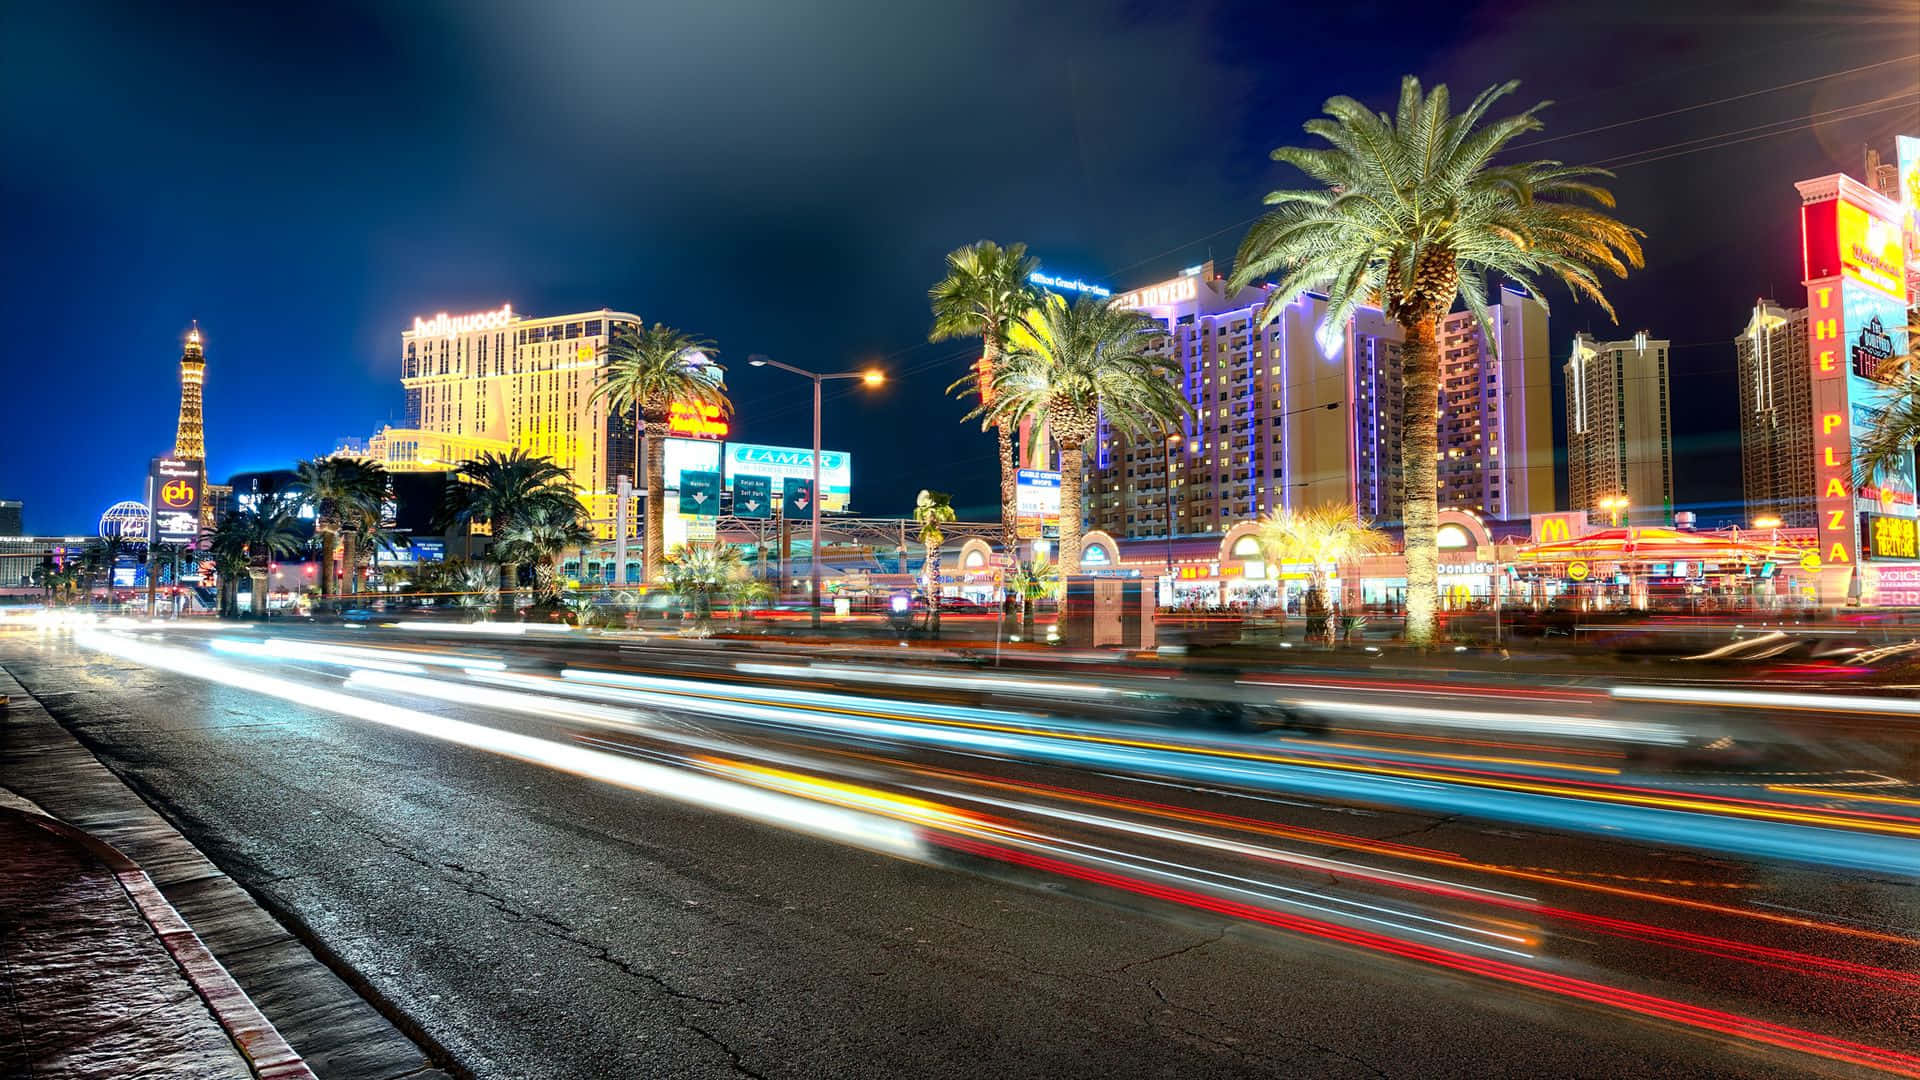 Impresionantepanorama Nocturno De Las Vegas Fondo de pantalla